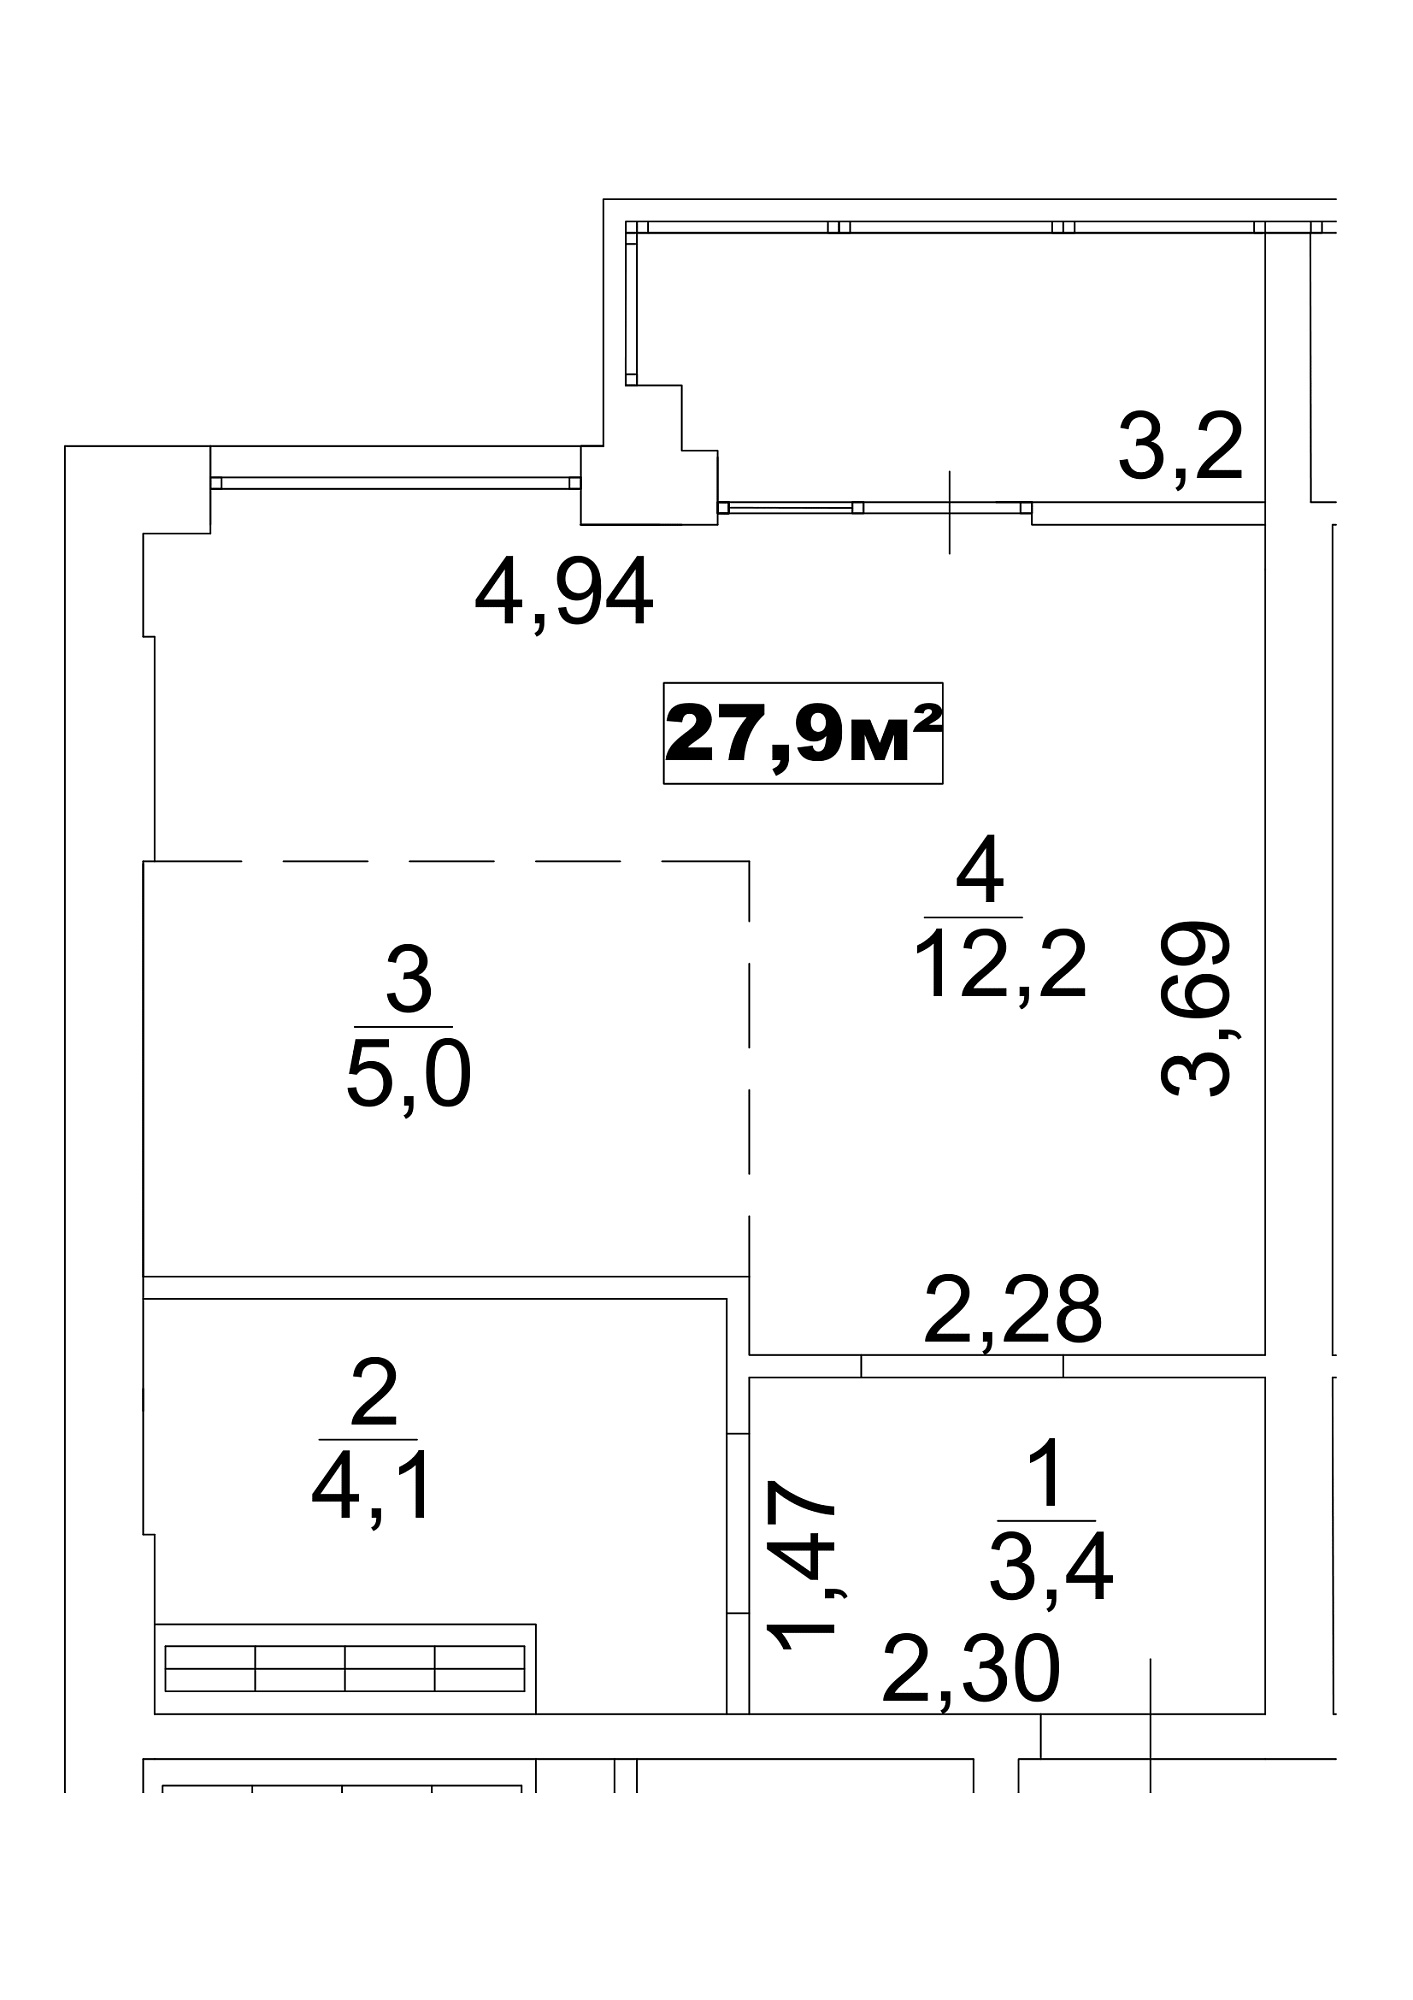 Планировка Smart-квартира площей 27.9м2, AB-13-02/0009б.